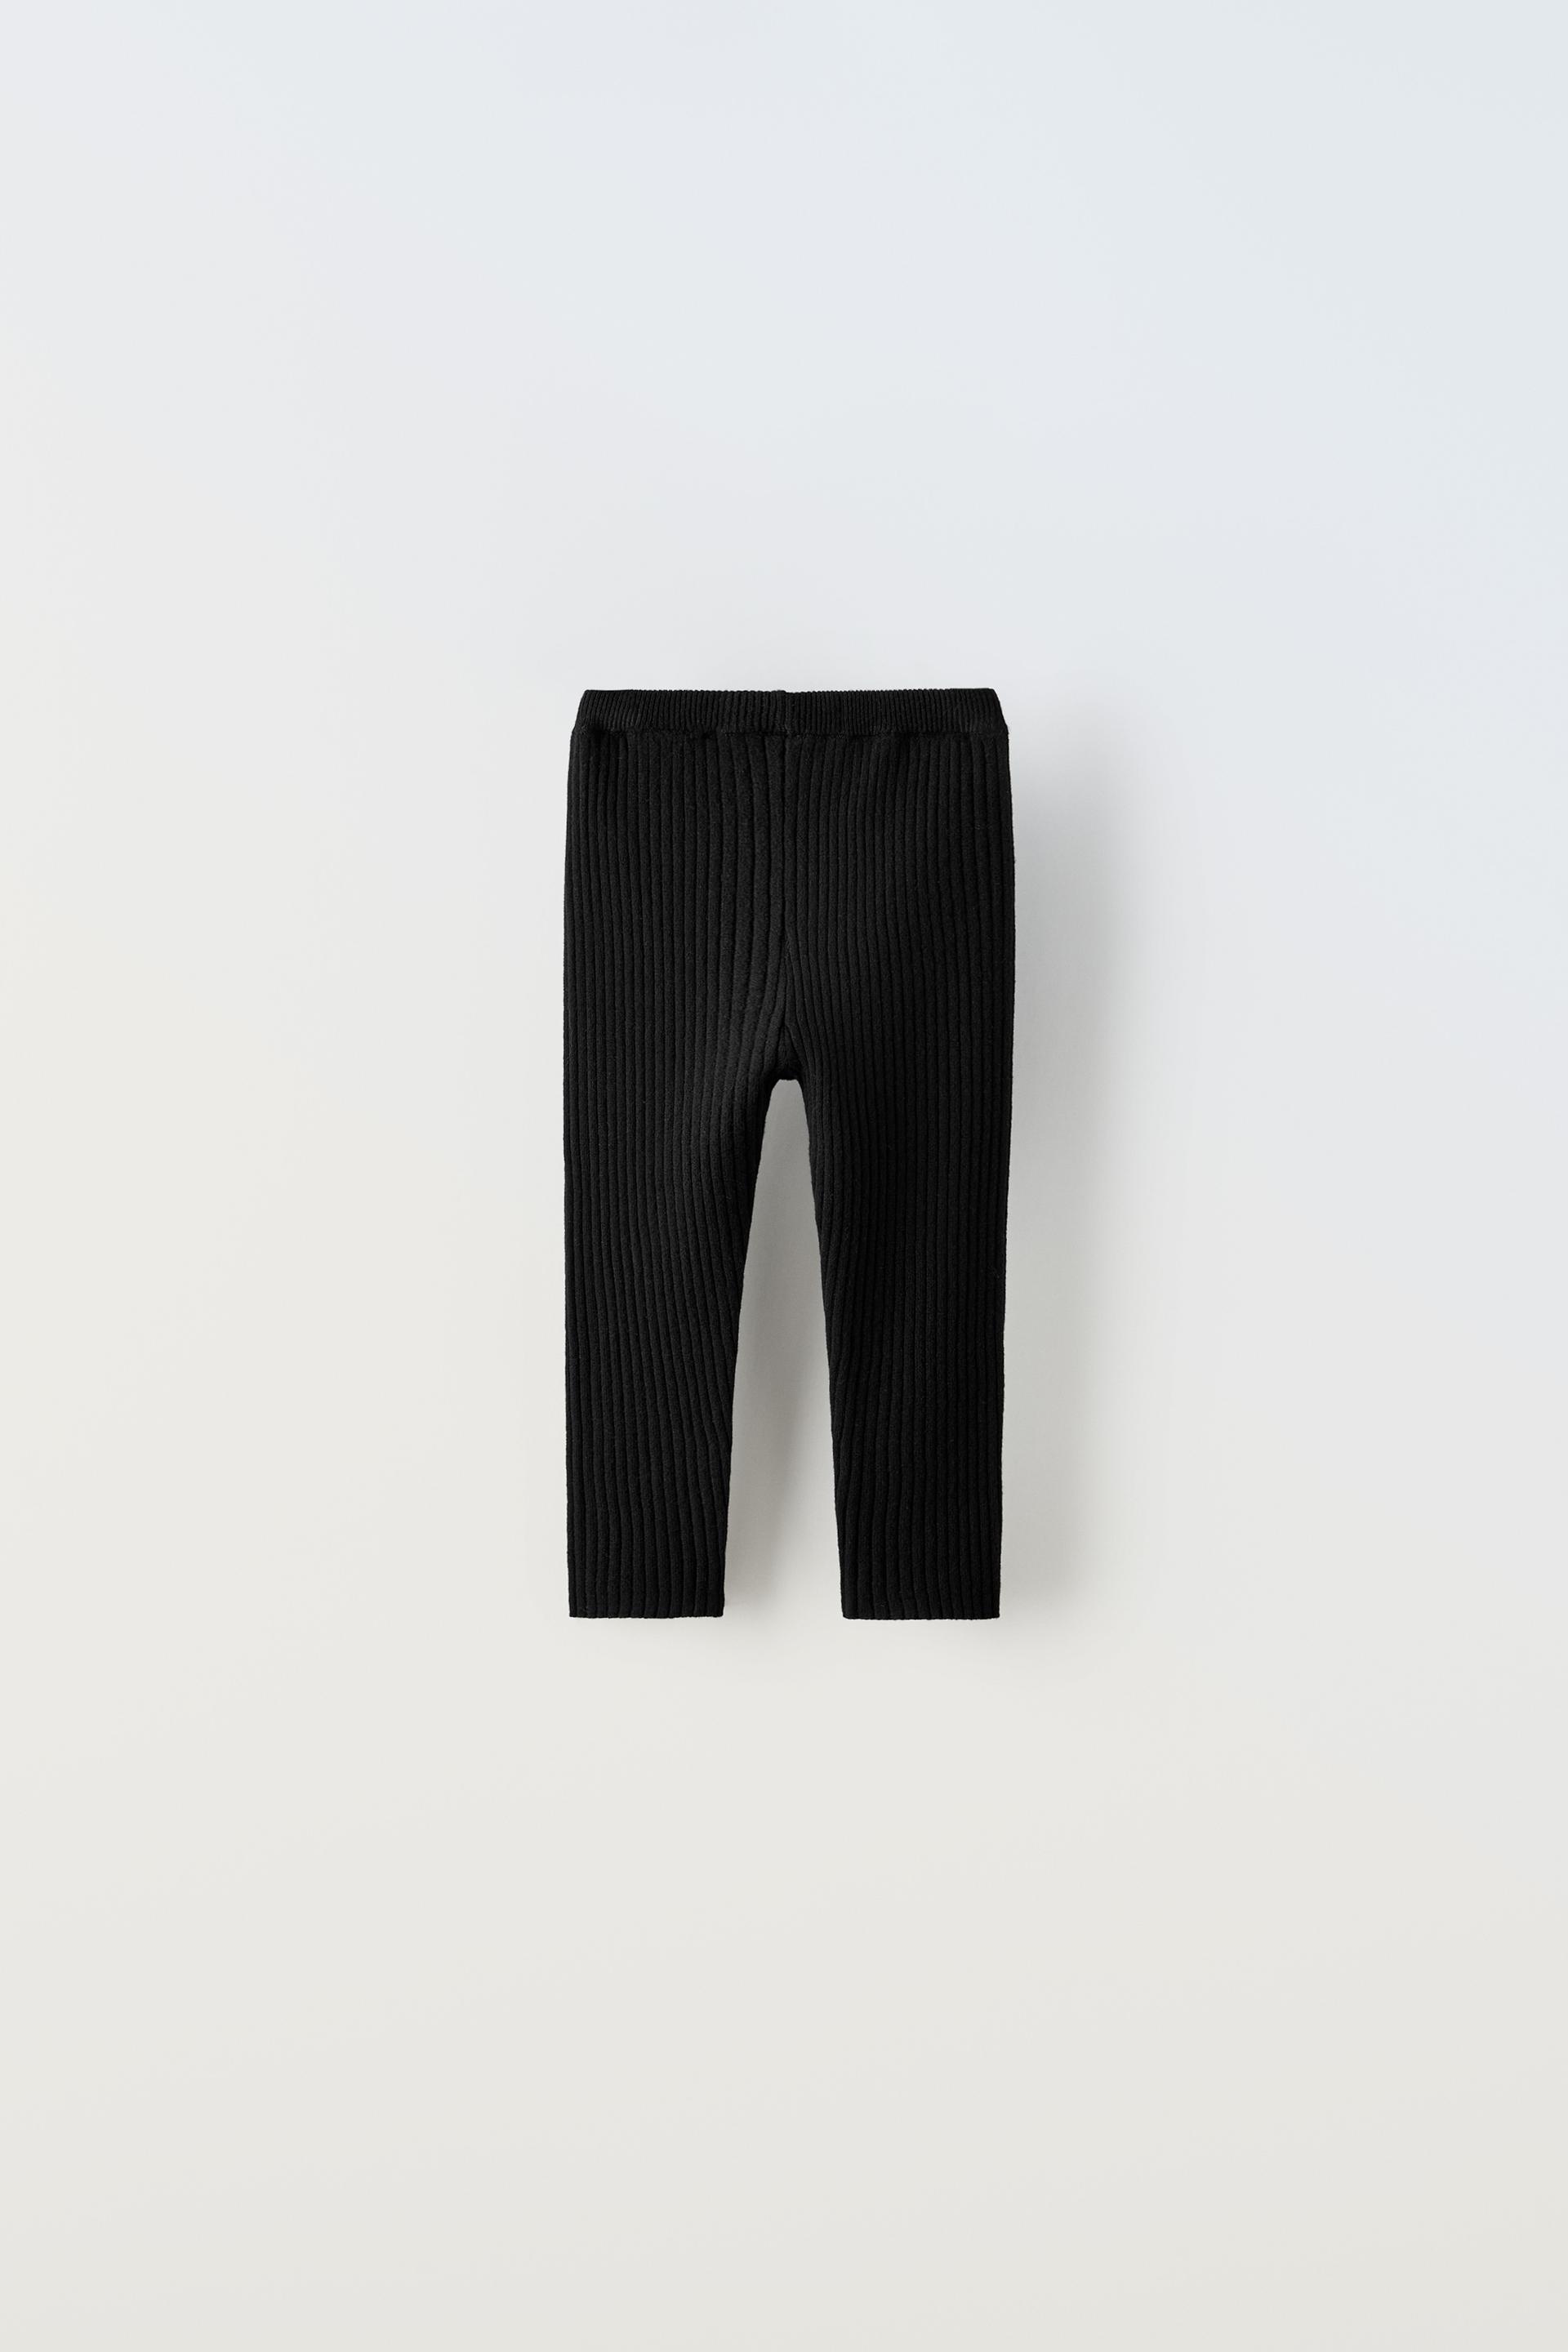 Zara, Pants & Jumpsuits, Nwt Zara Ribbed Legging